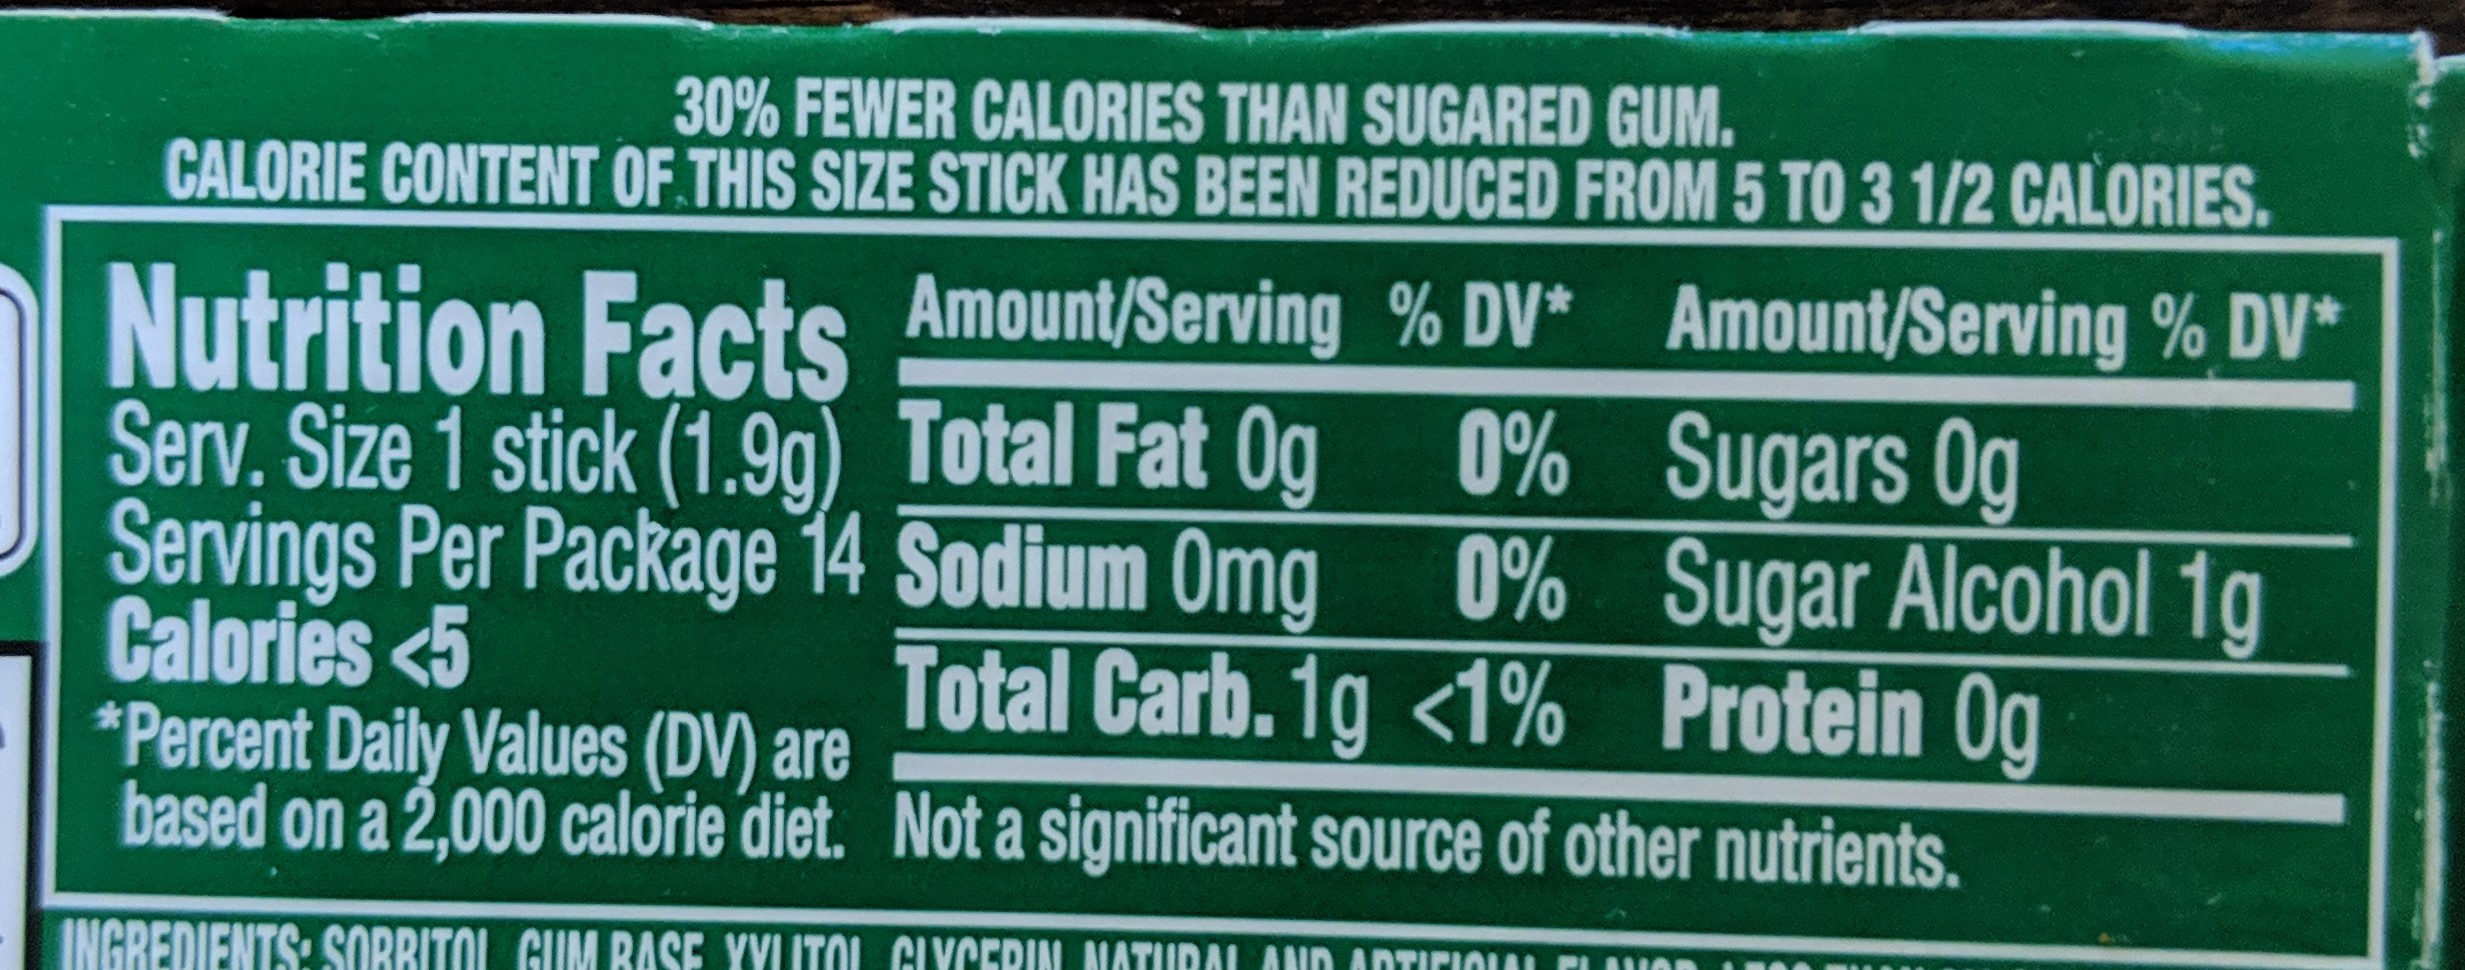 Gum spearmint sugar free1x14 pc - Nutrition facts